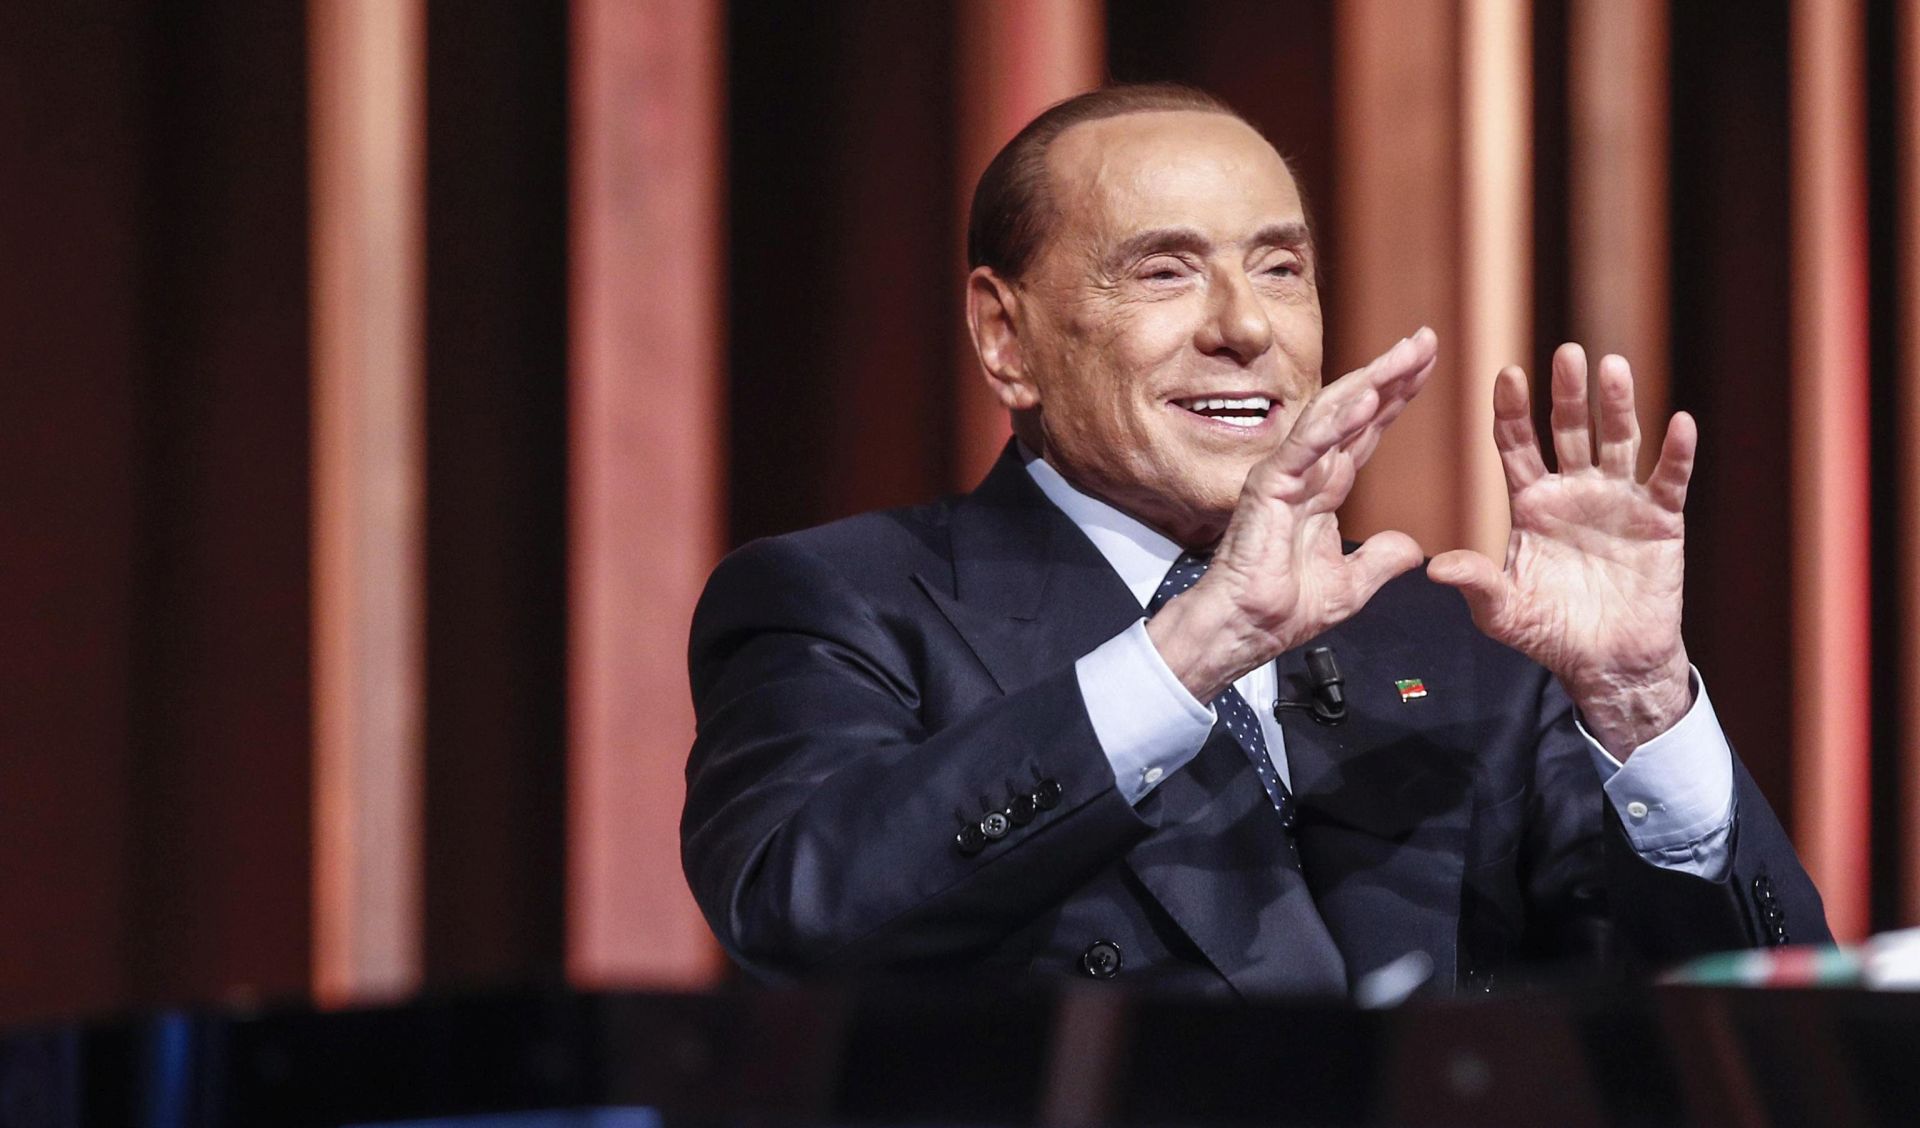 epa06515439 Italian former premier Silvio Berlusconi gestures during the Italian Tv show 'In mezz'ora piu', in Rome, Italy, 11 February 2018.  EPA/GIUSEPPE LAMI